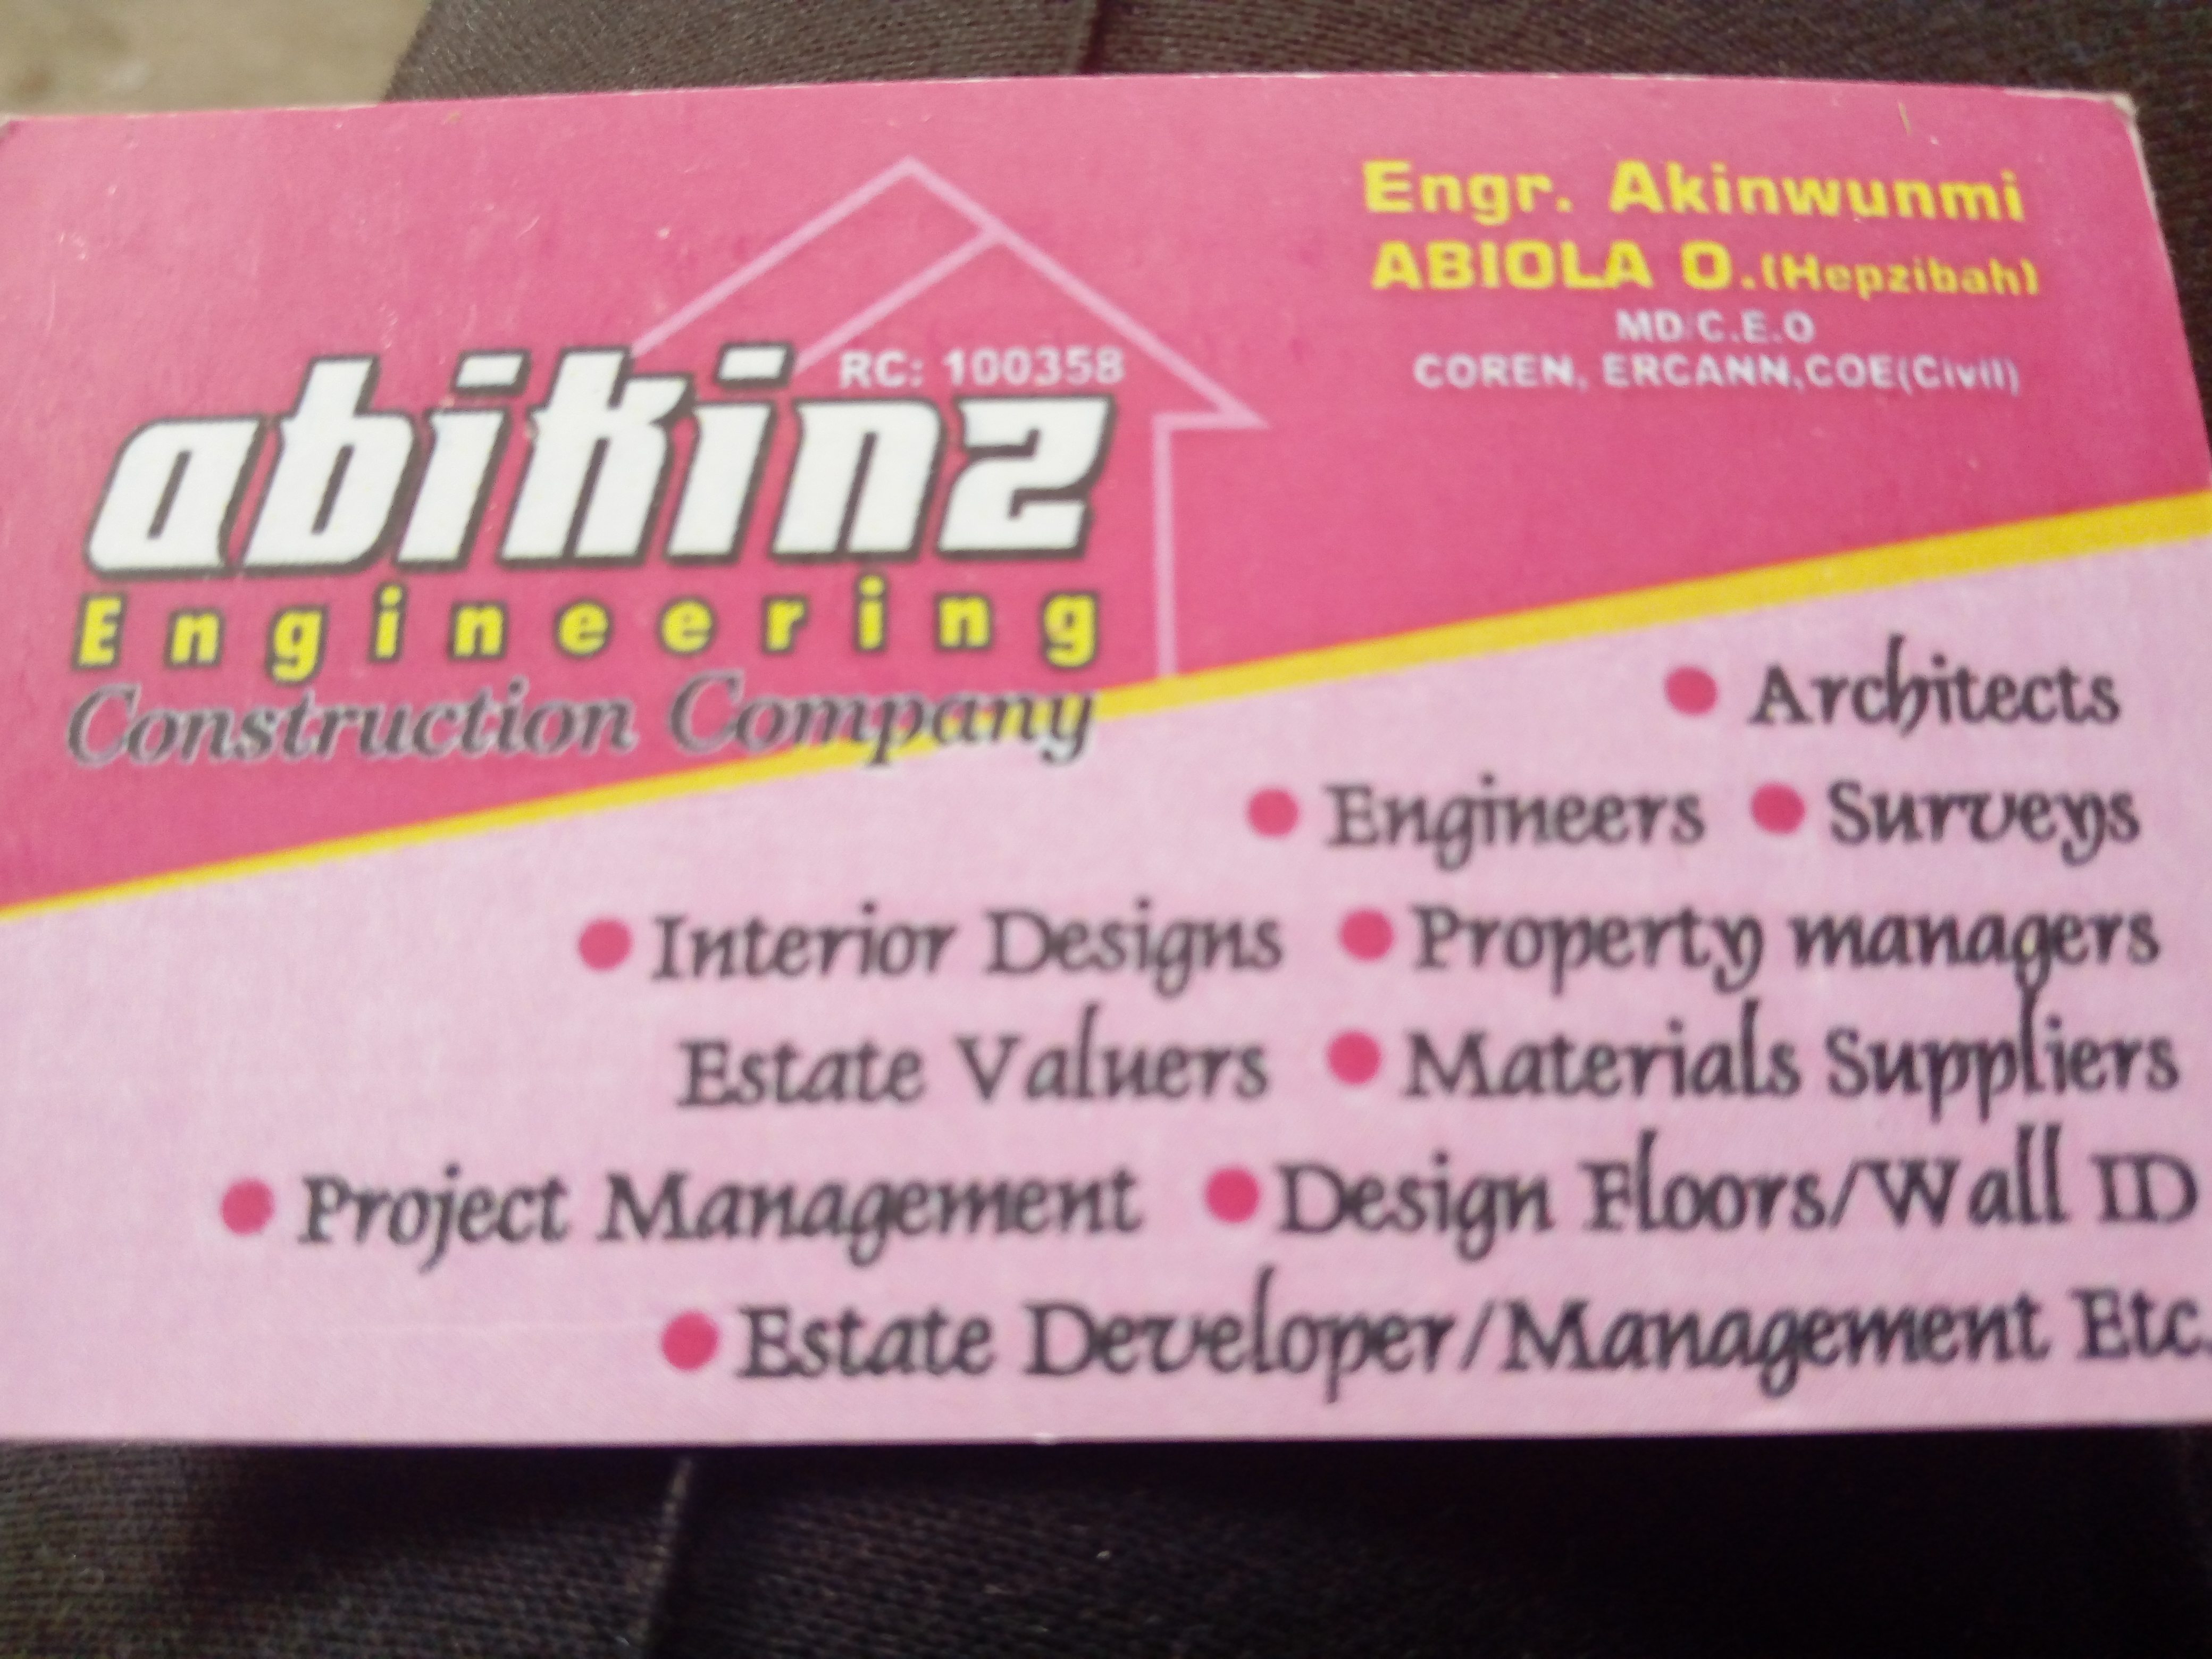 Abikinz engineering construction company provider